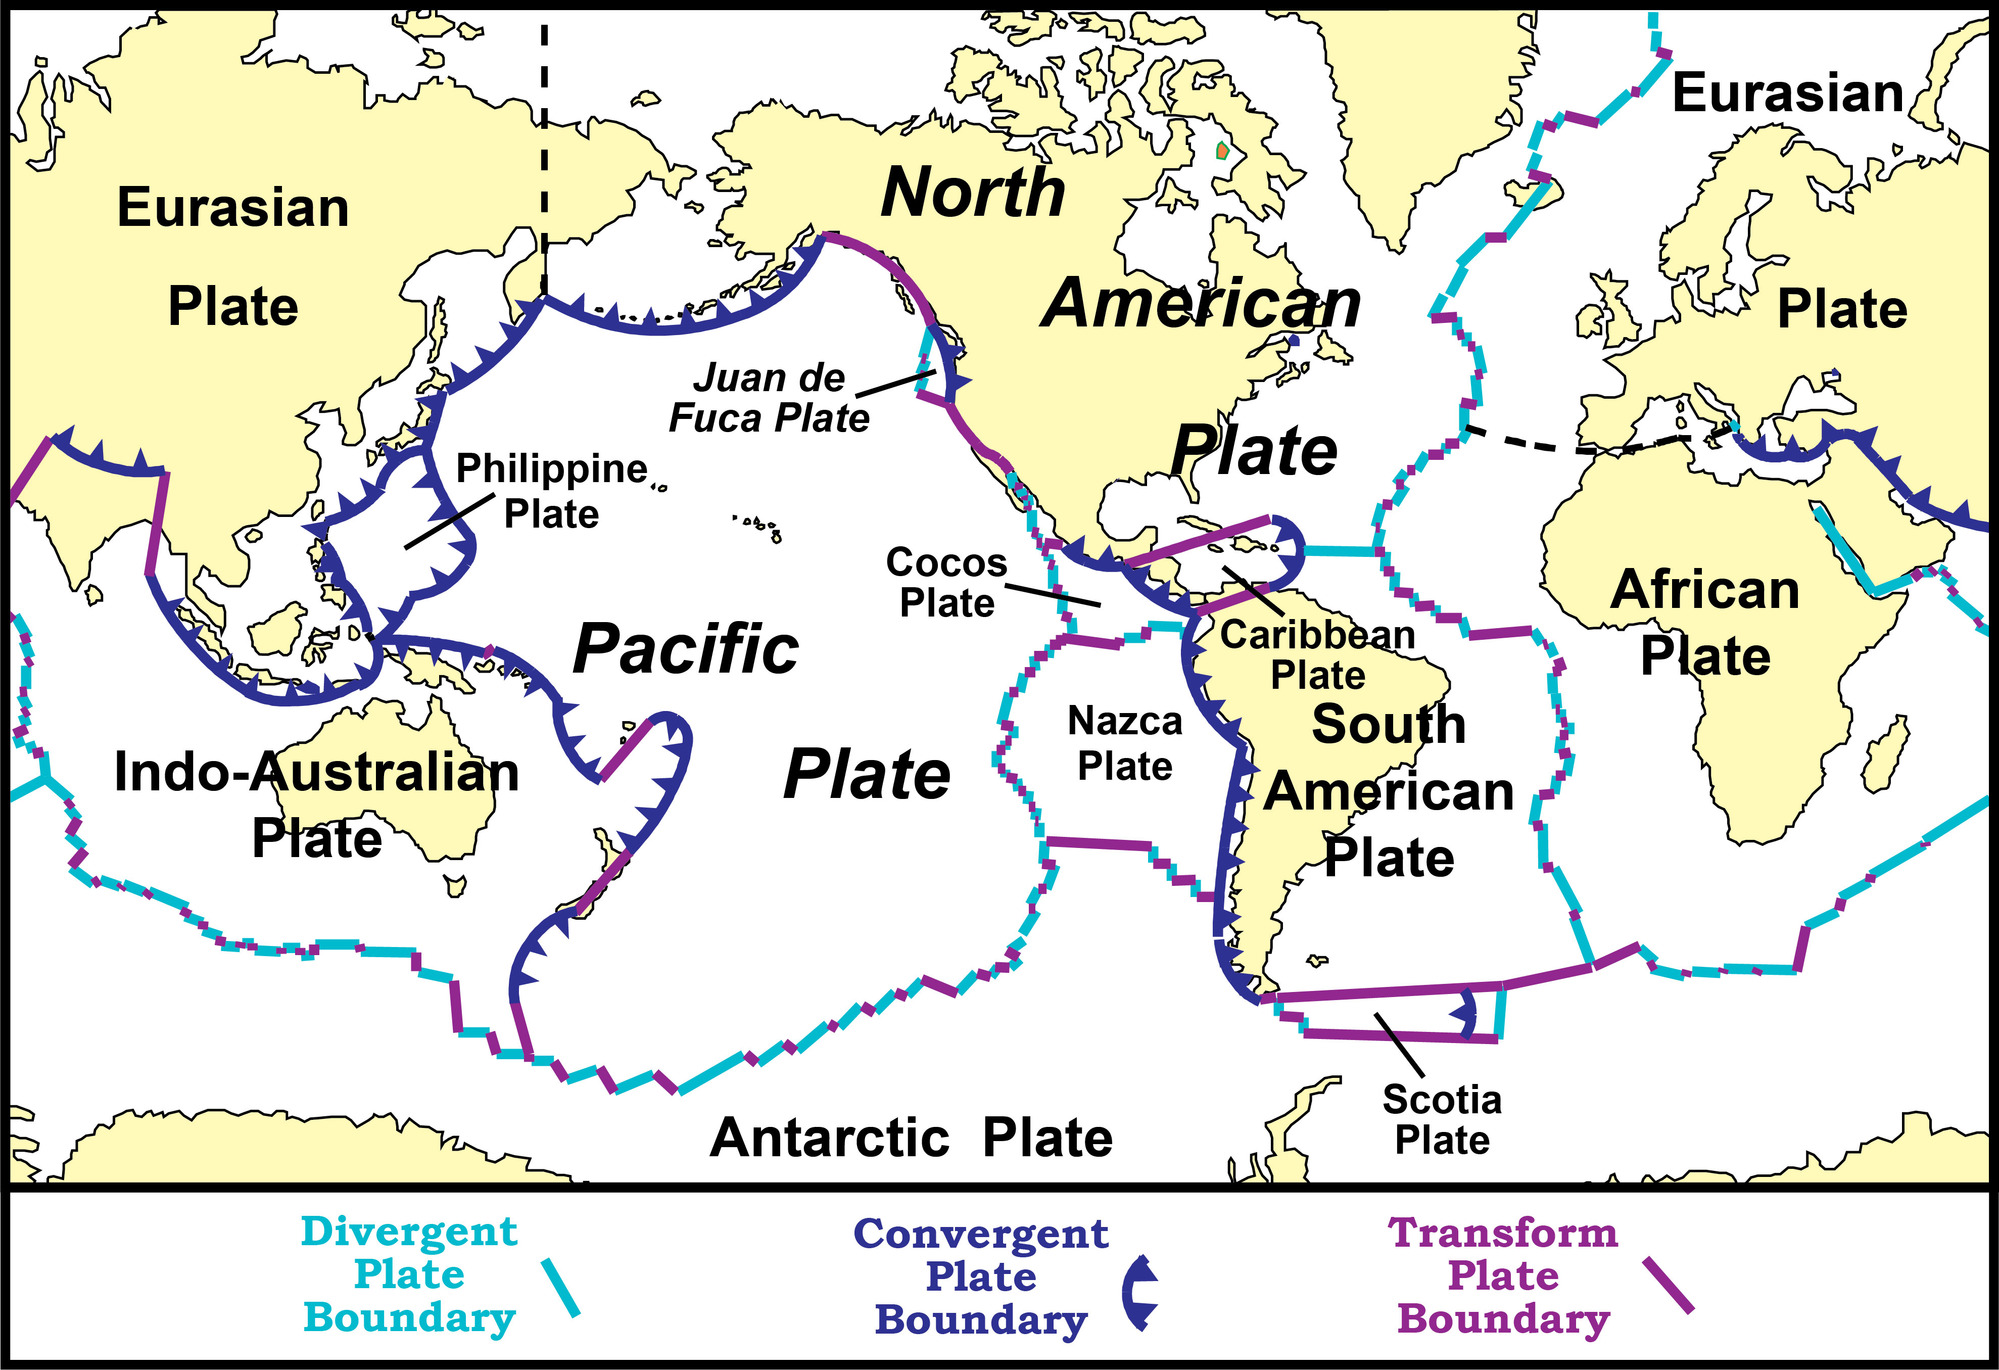 antarctic tectonic plate